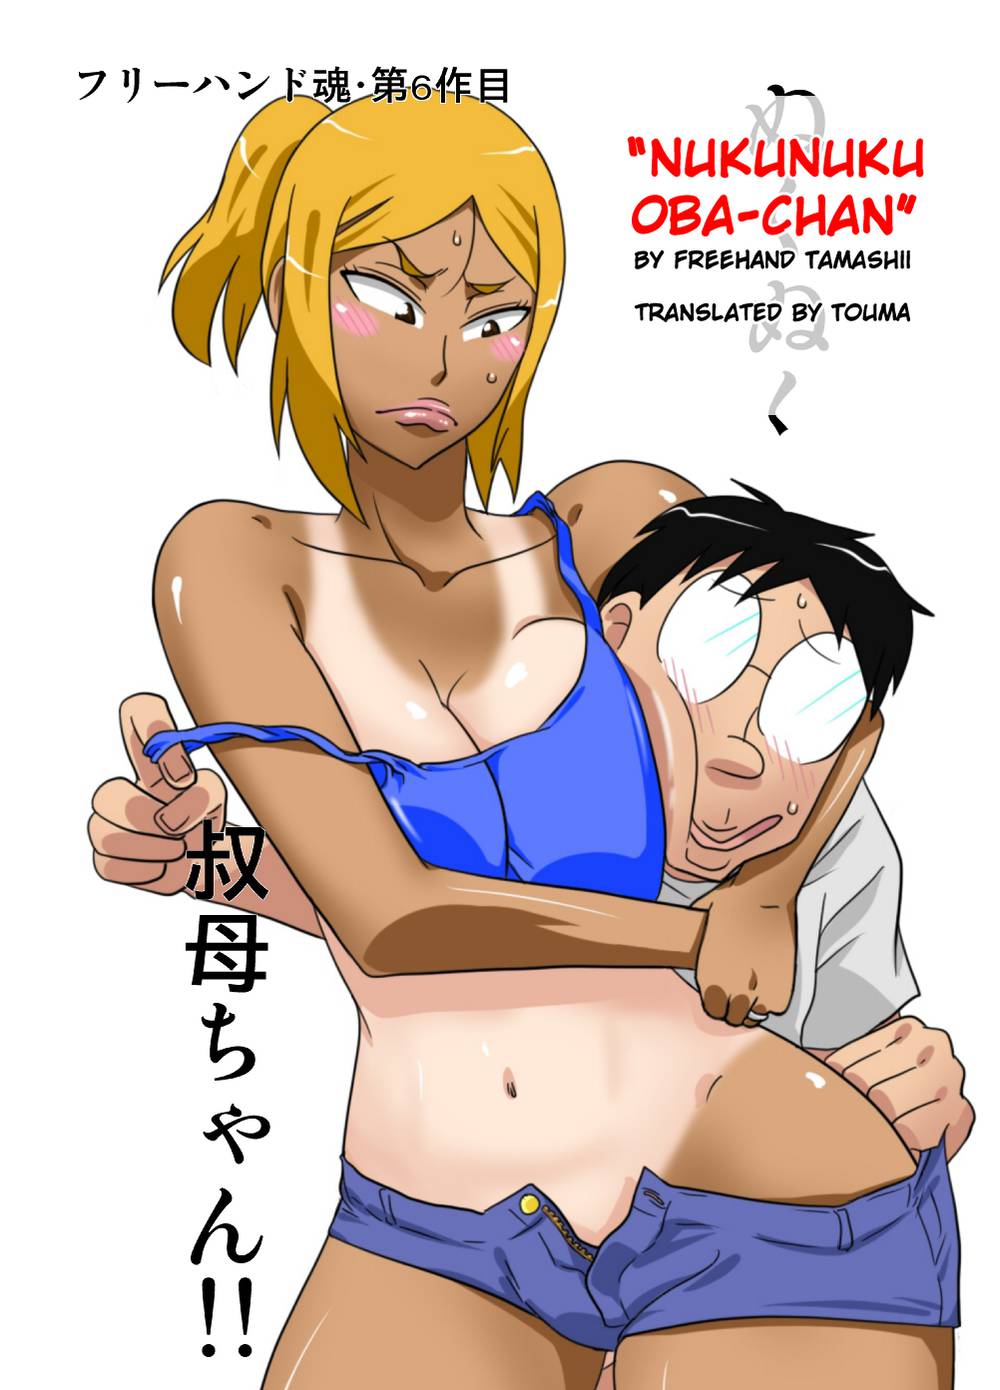 Hentai Manga Comic-Nukunuku-Chapter 1-NukuNuku Oba-chan-1